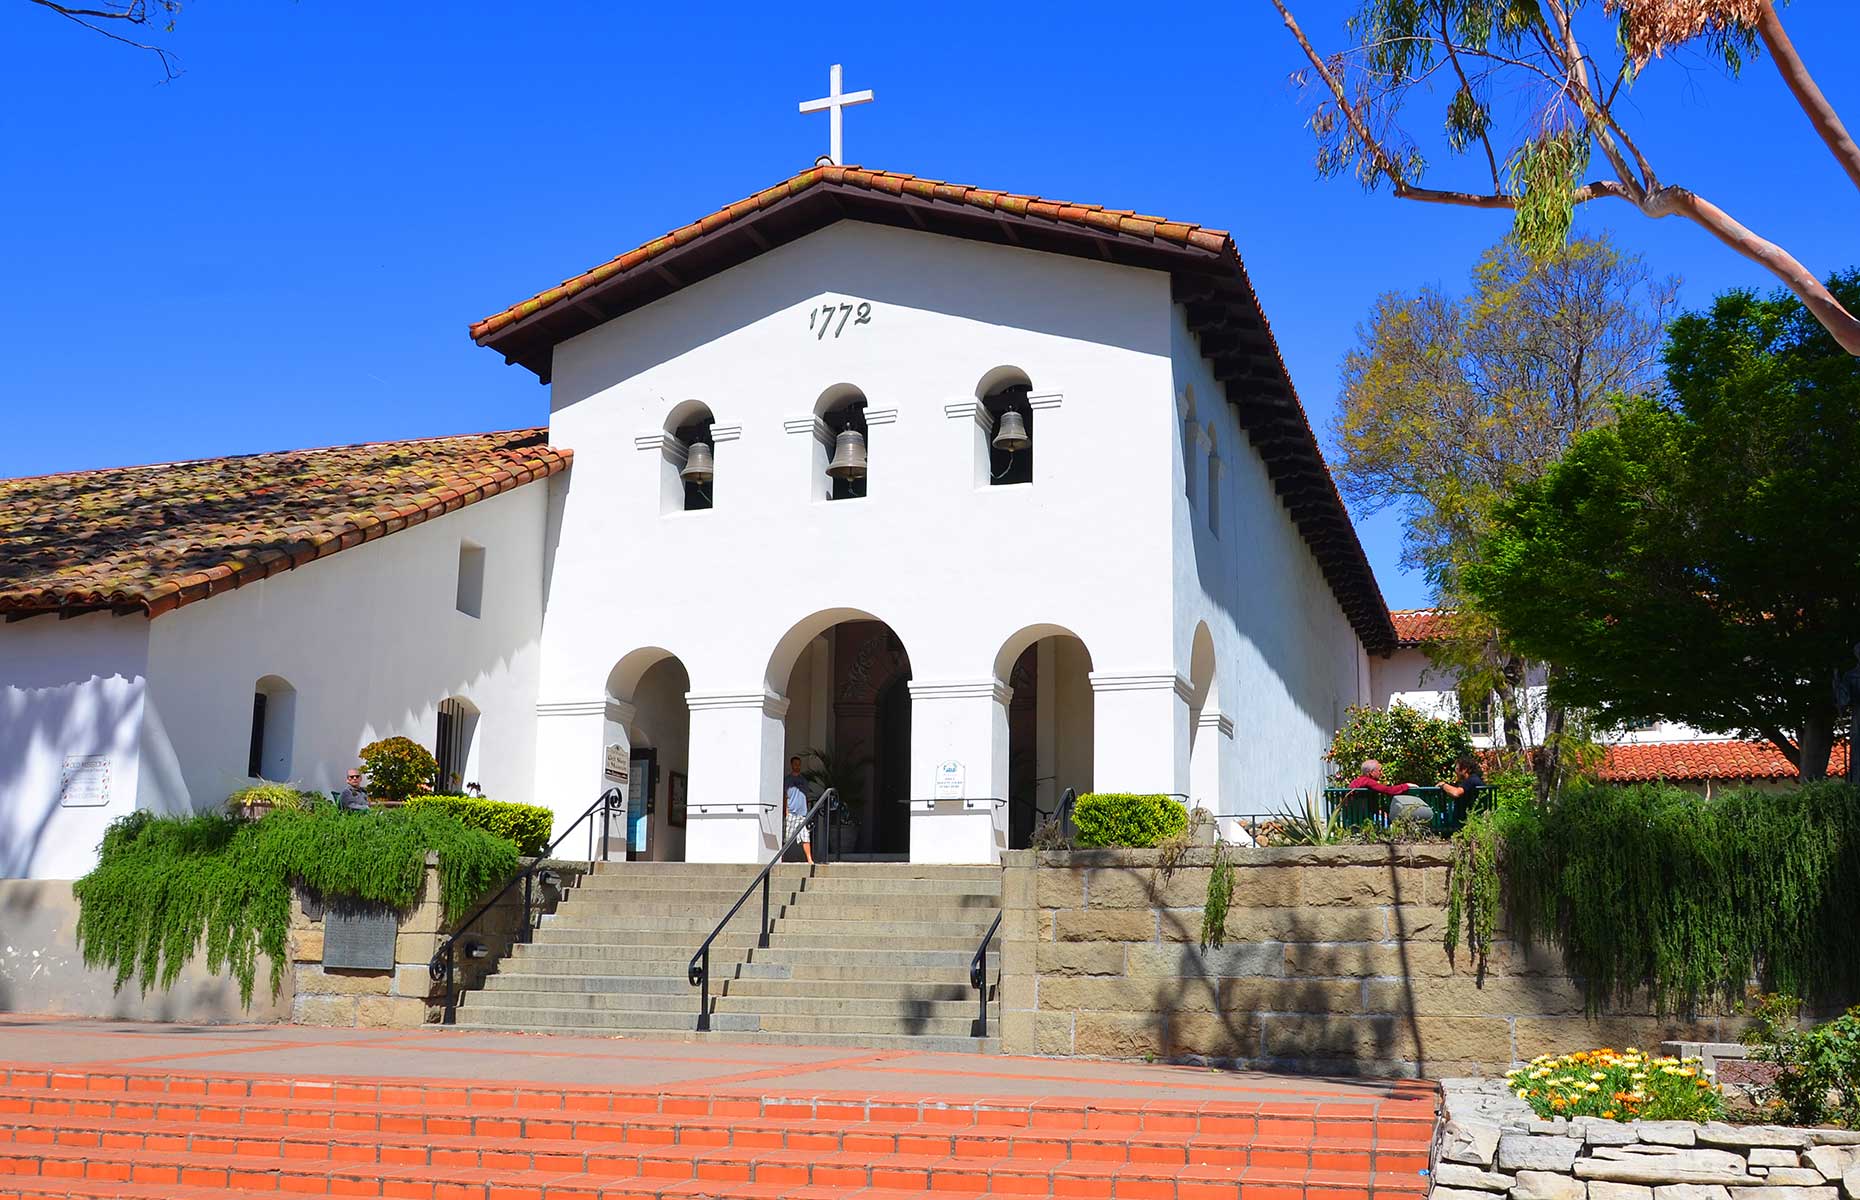 San Luis Obispo (Image: meunierd/Shutterstock)